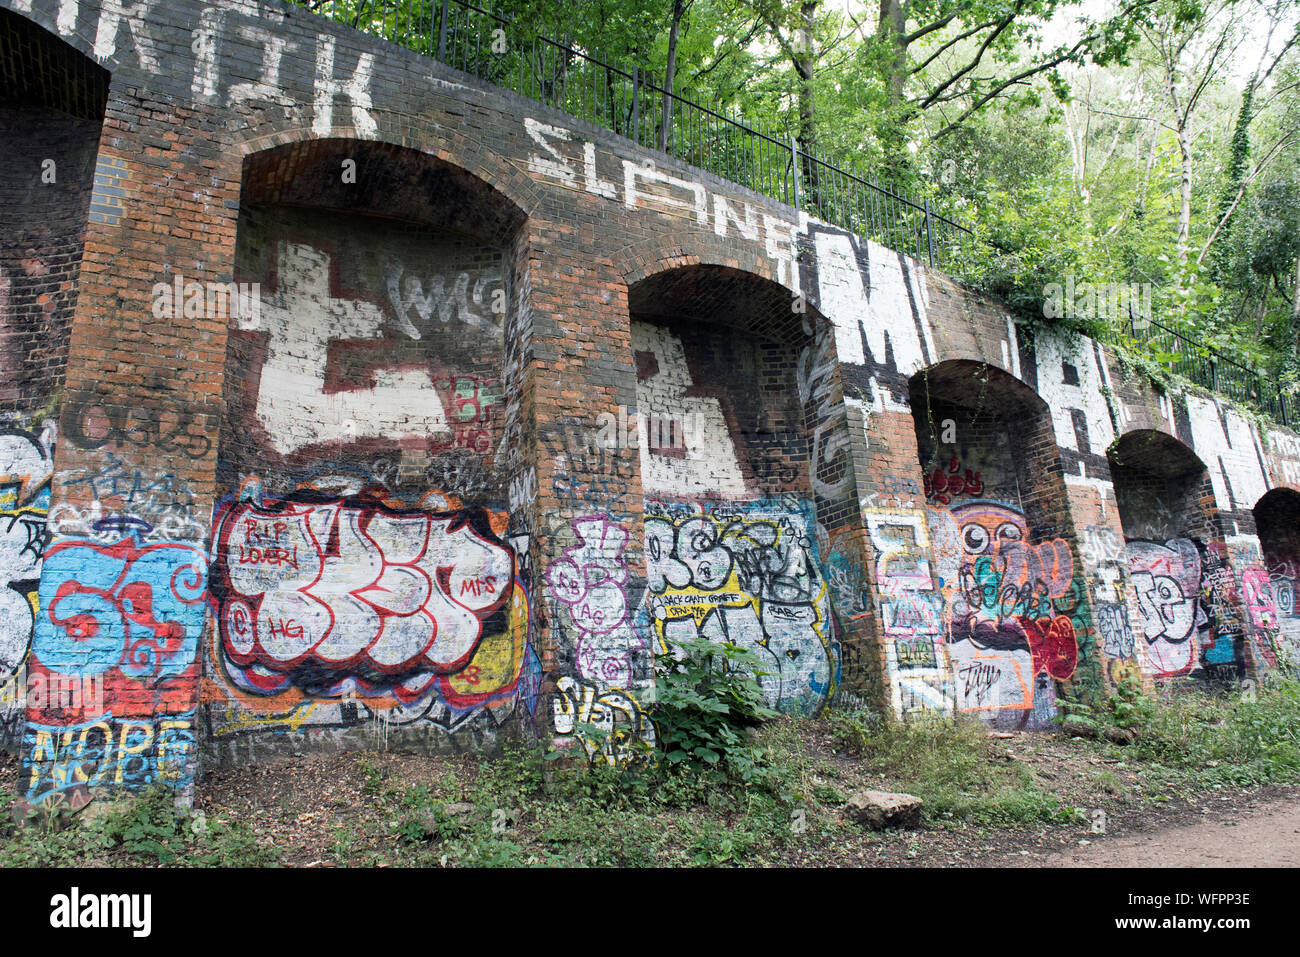 Graffiti on brick embankment, Parkland Walk, a disused railway line now an urban nature reserve, London Borough of Islington Stock Photo